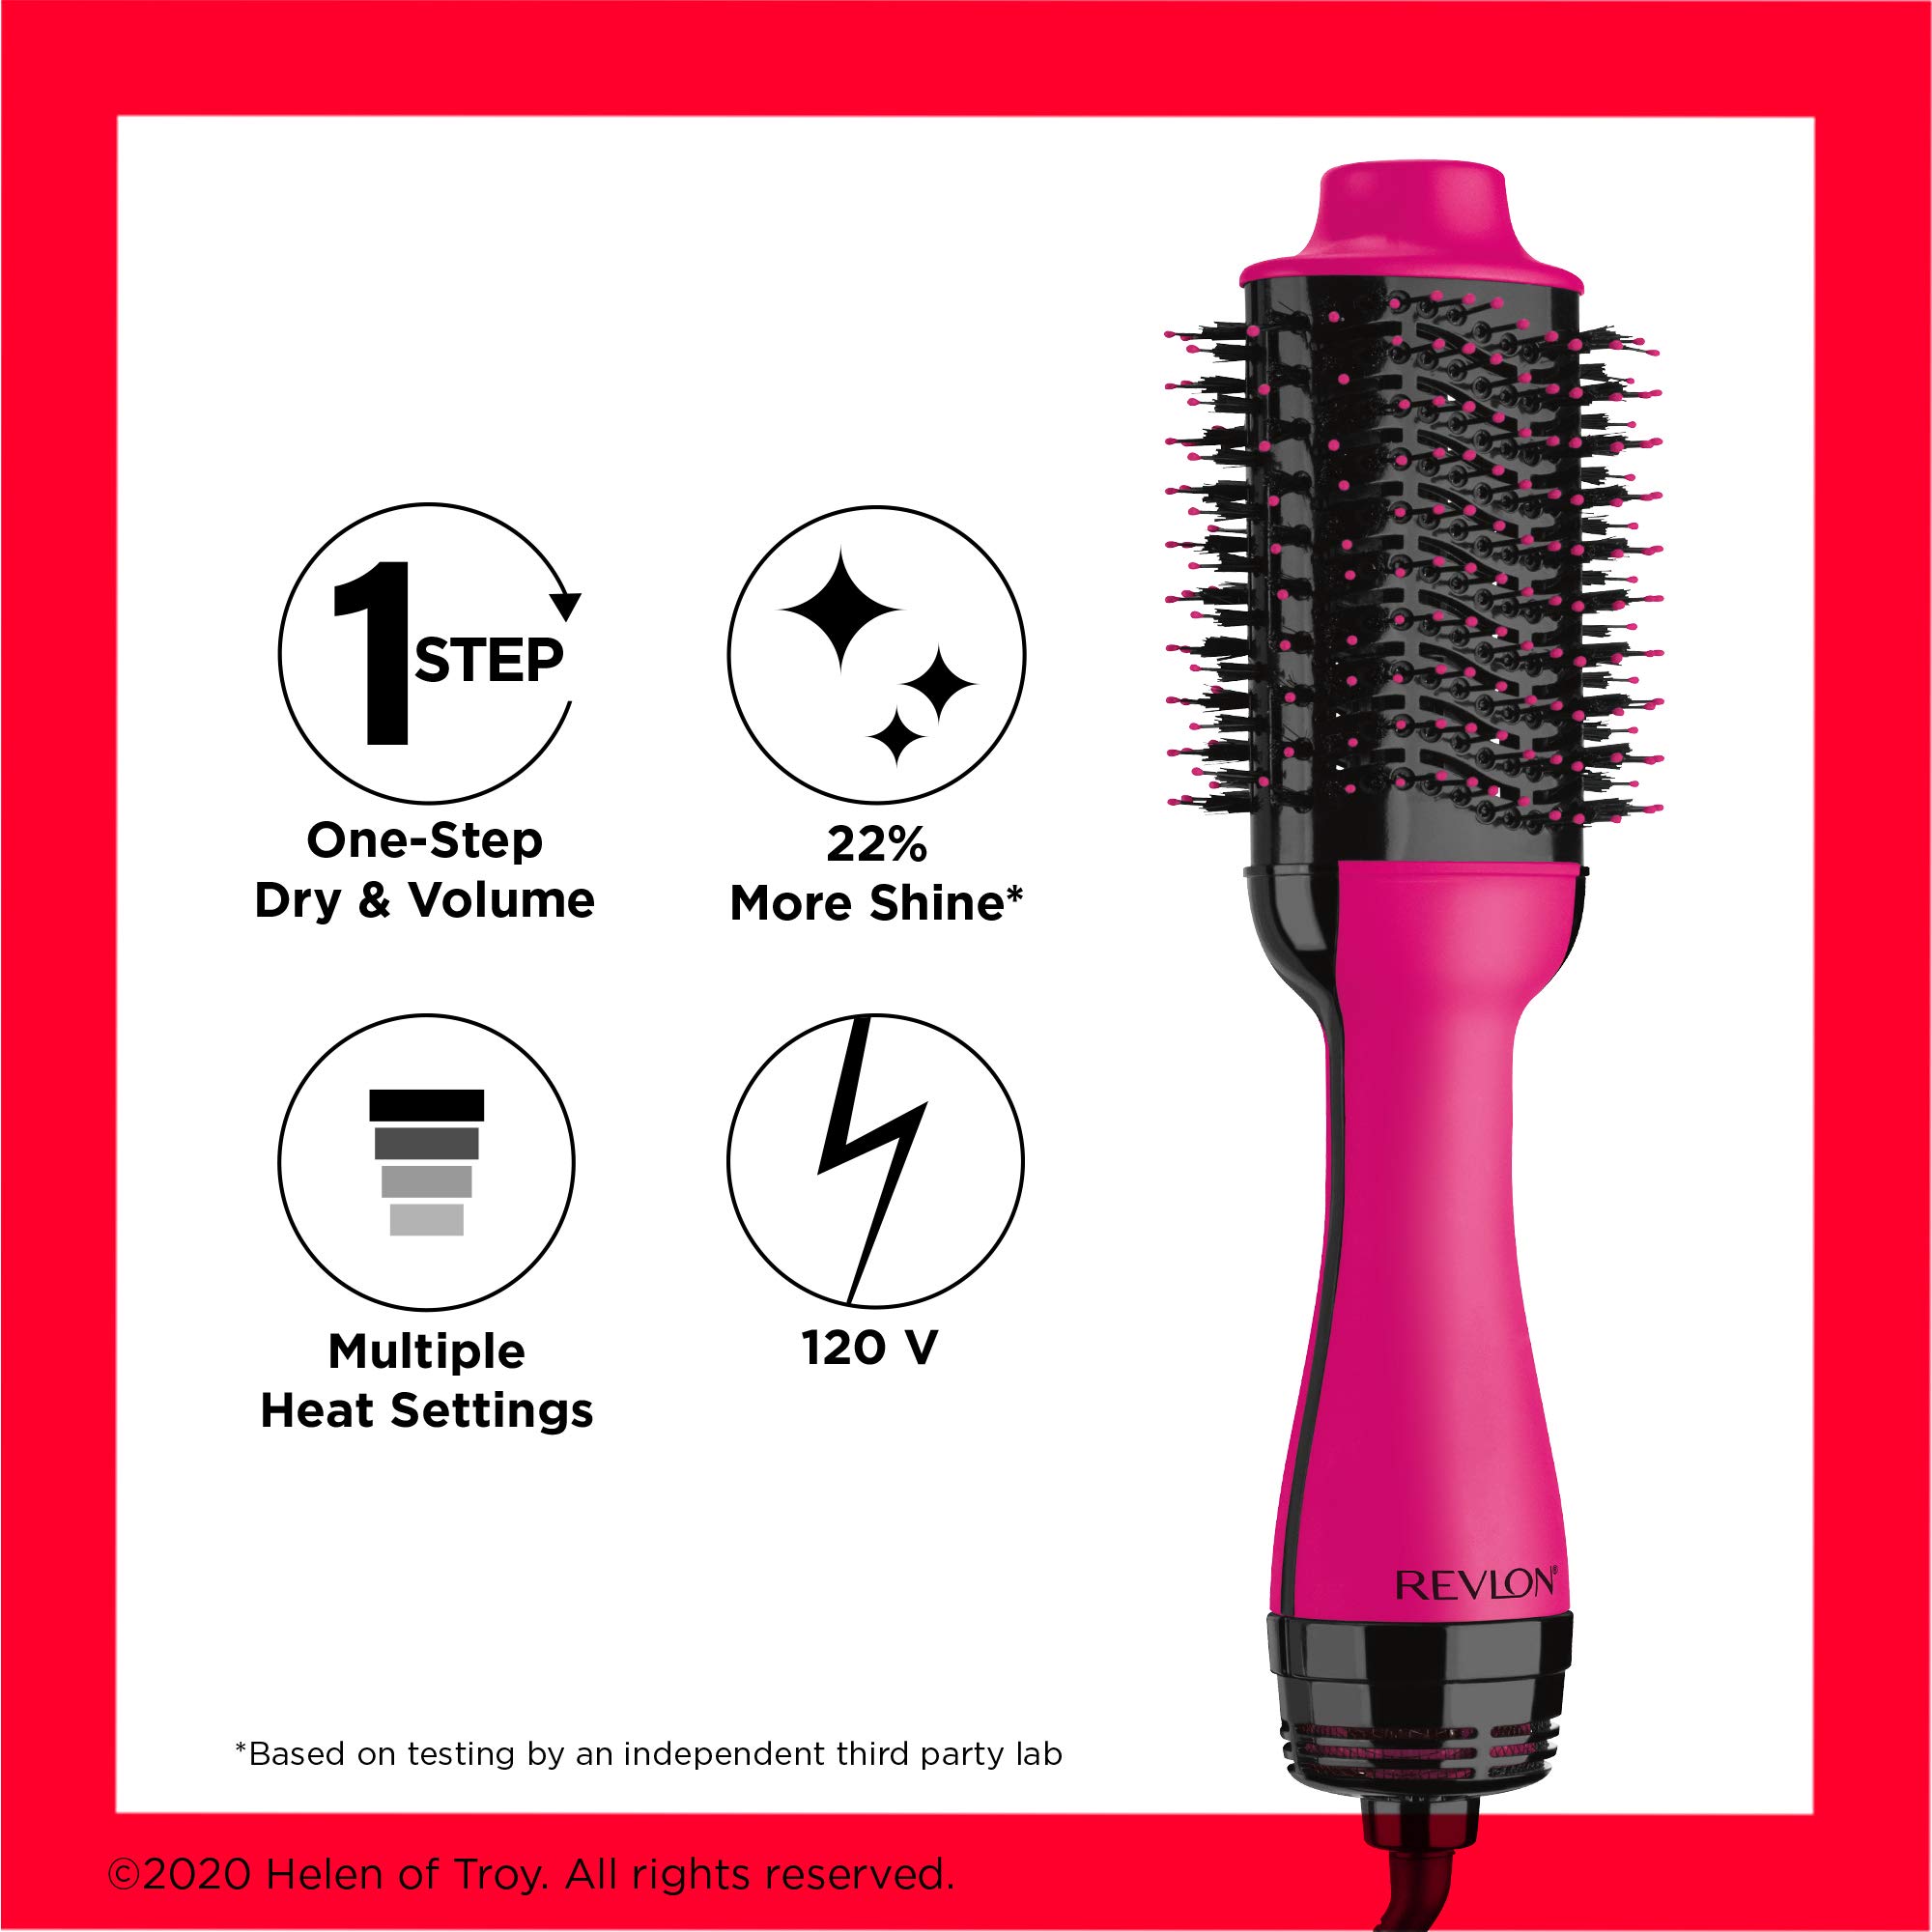 REVLON One-Step Volumizer Original 1.0 Hair Dryer and Hot Air Brush, Pink